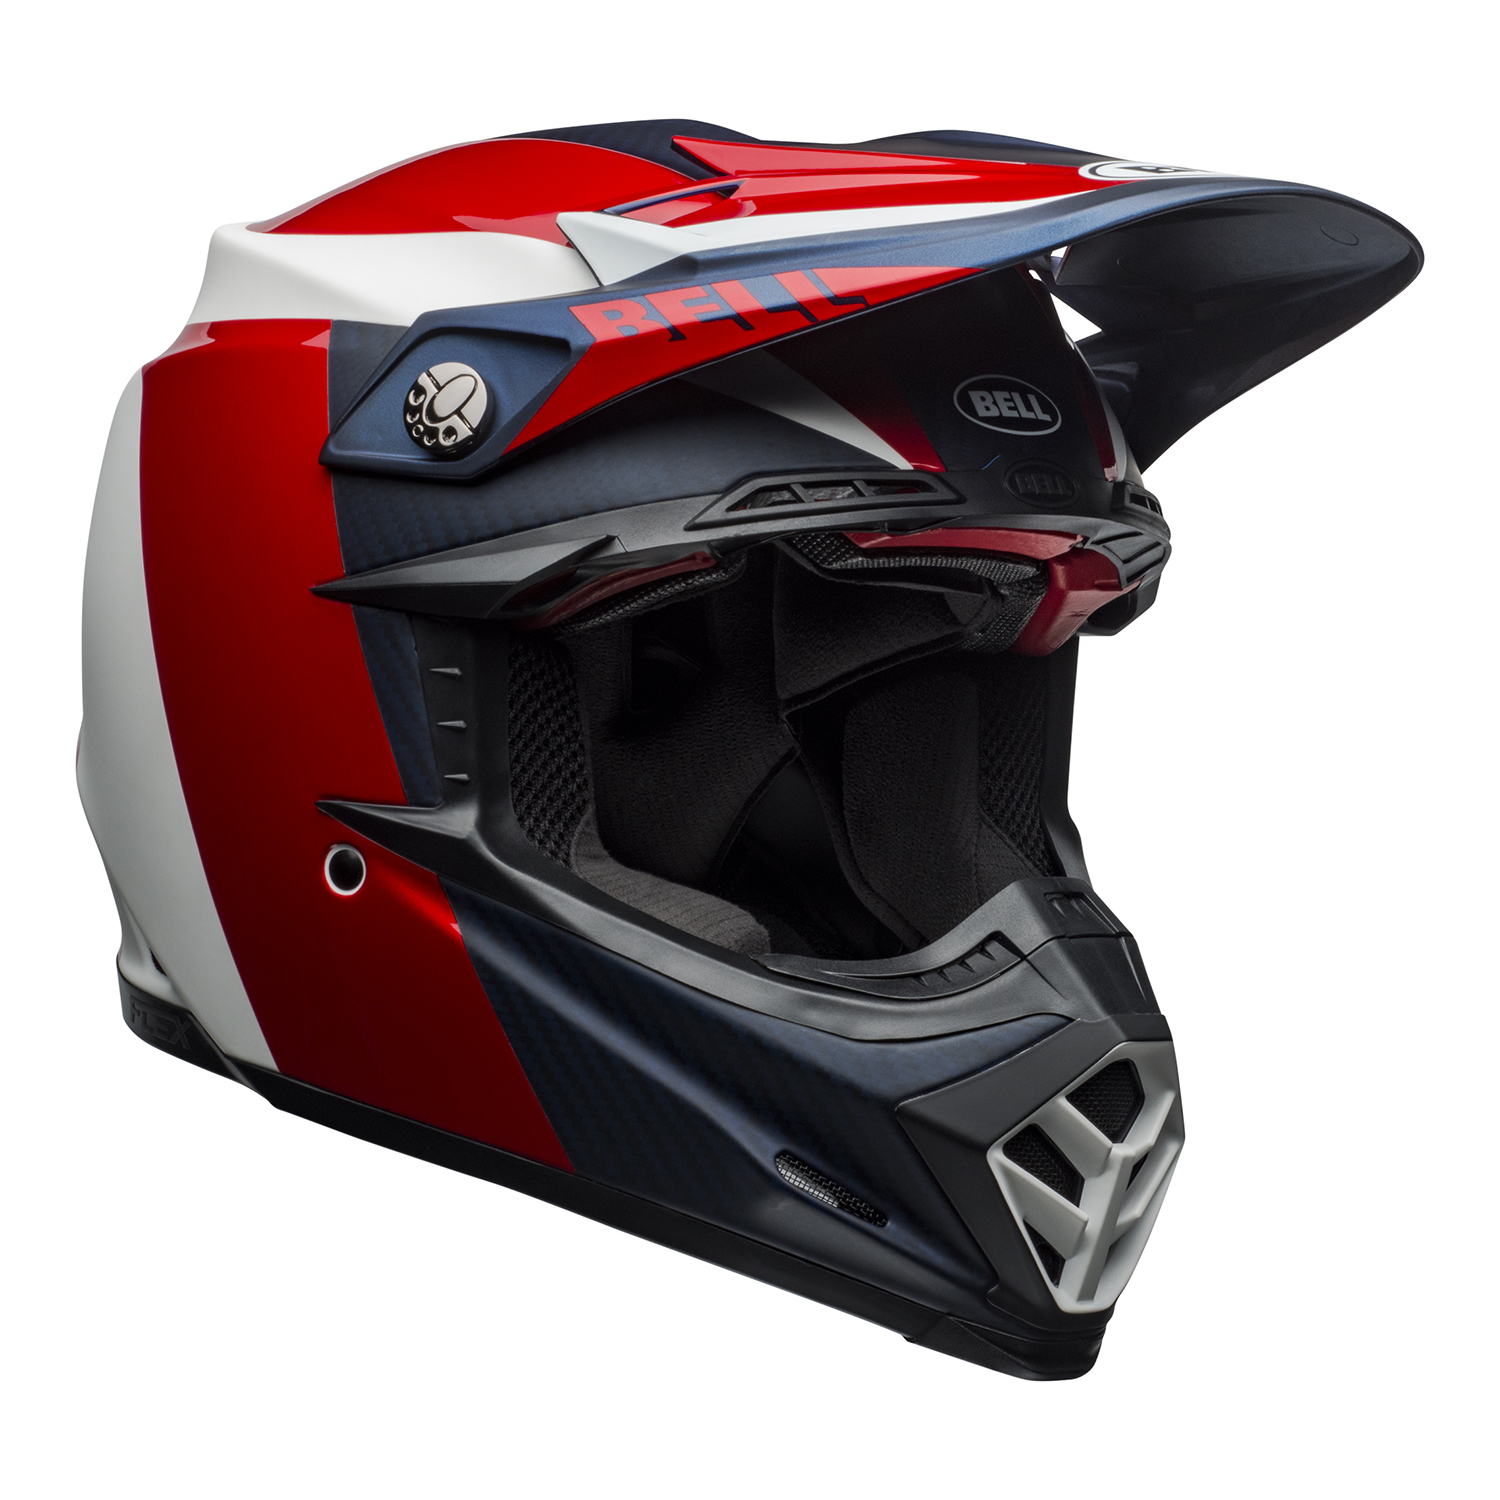 Division Matte/Gloss White/Black/Blue, Medium Bell Moto-9 Flex Off-Road Motorcycle Helmet 